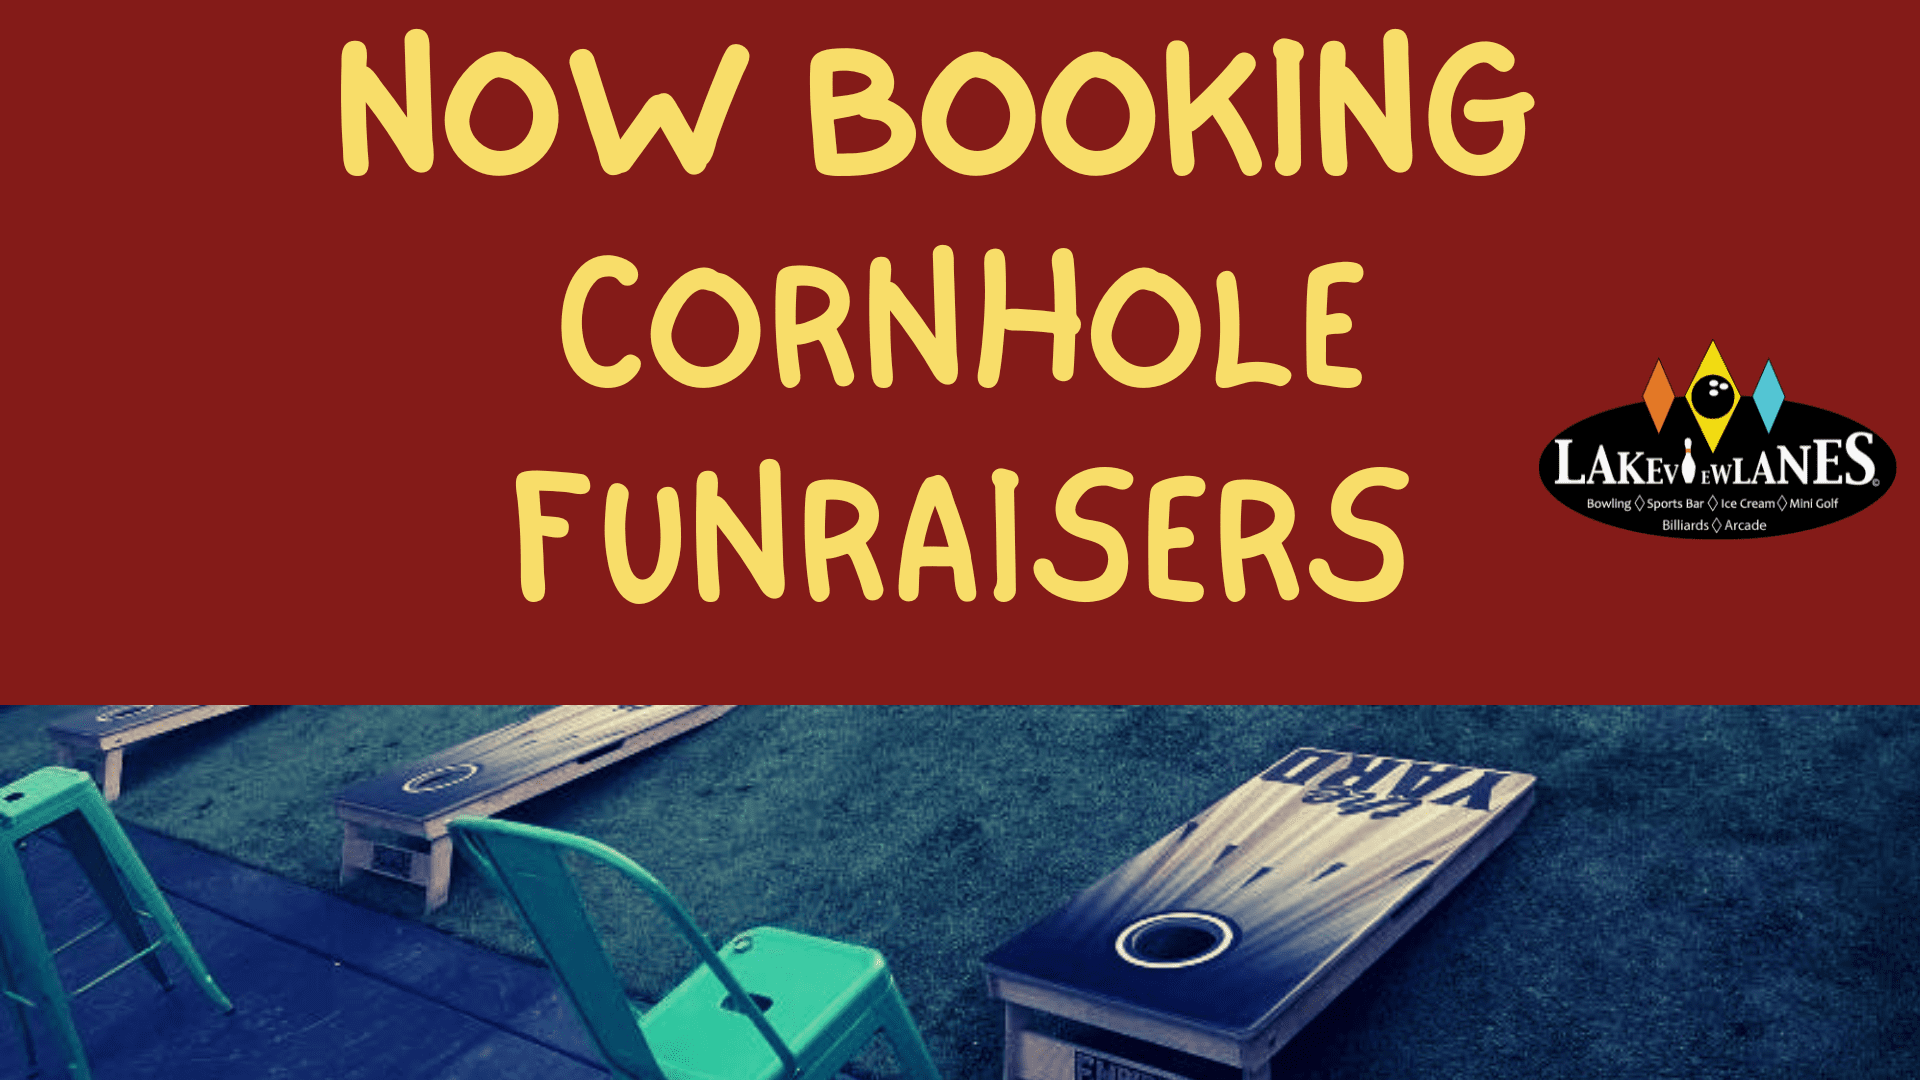 Now Booking Cornhole Funraisers